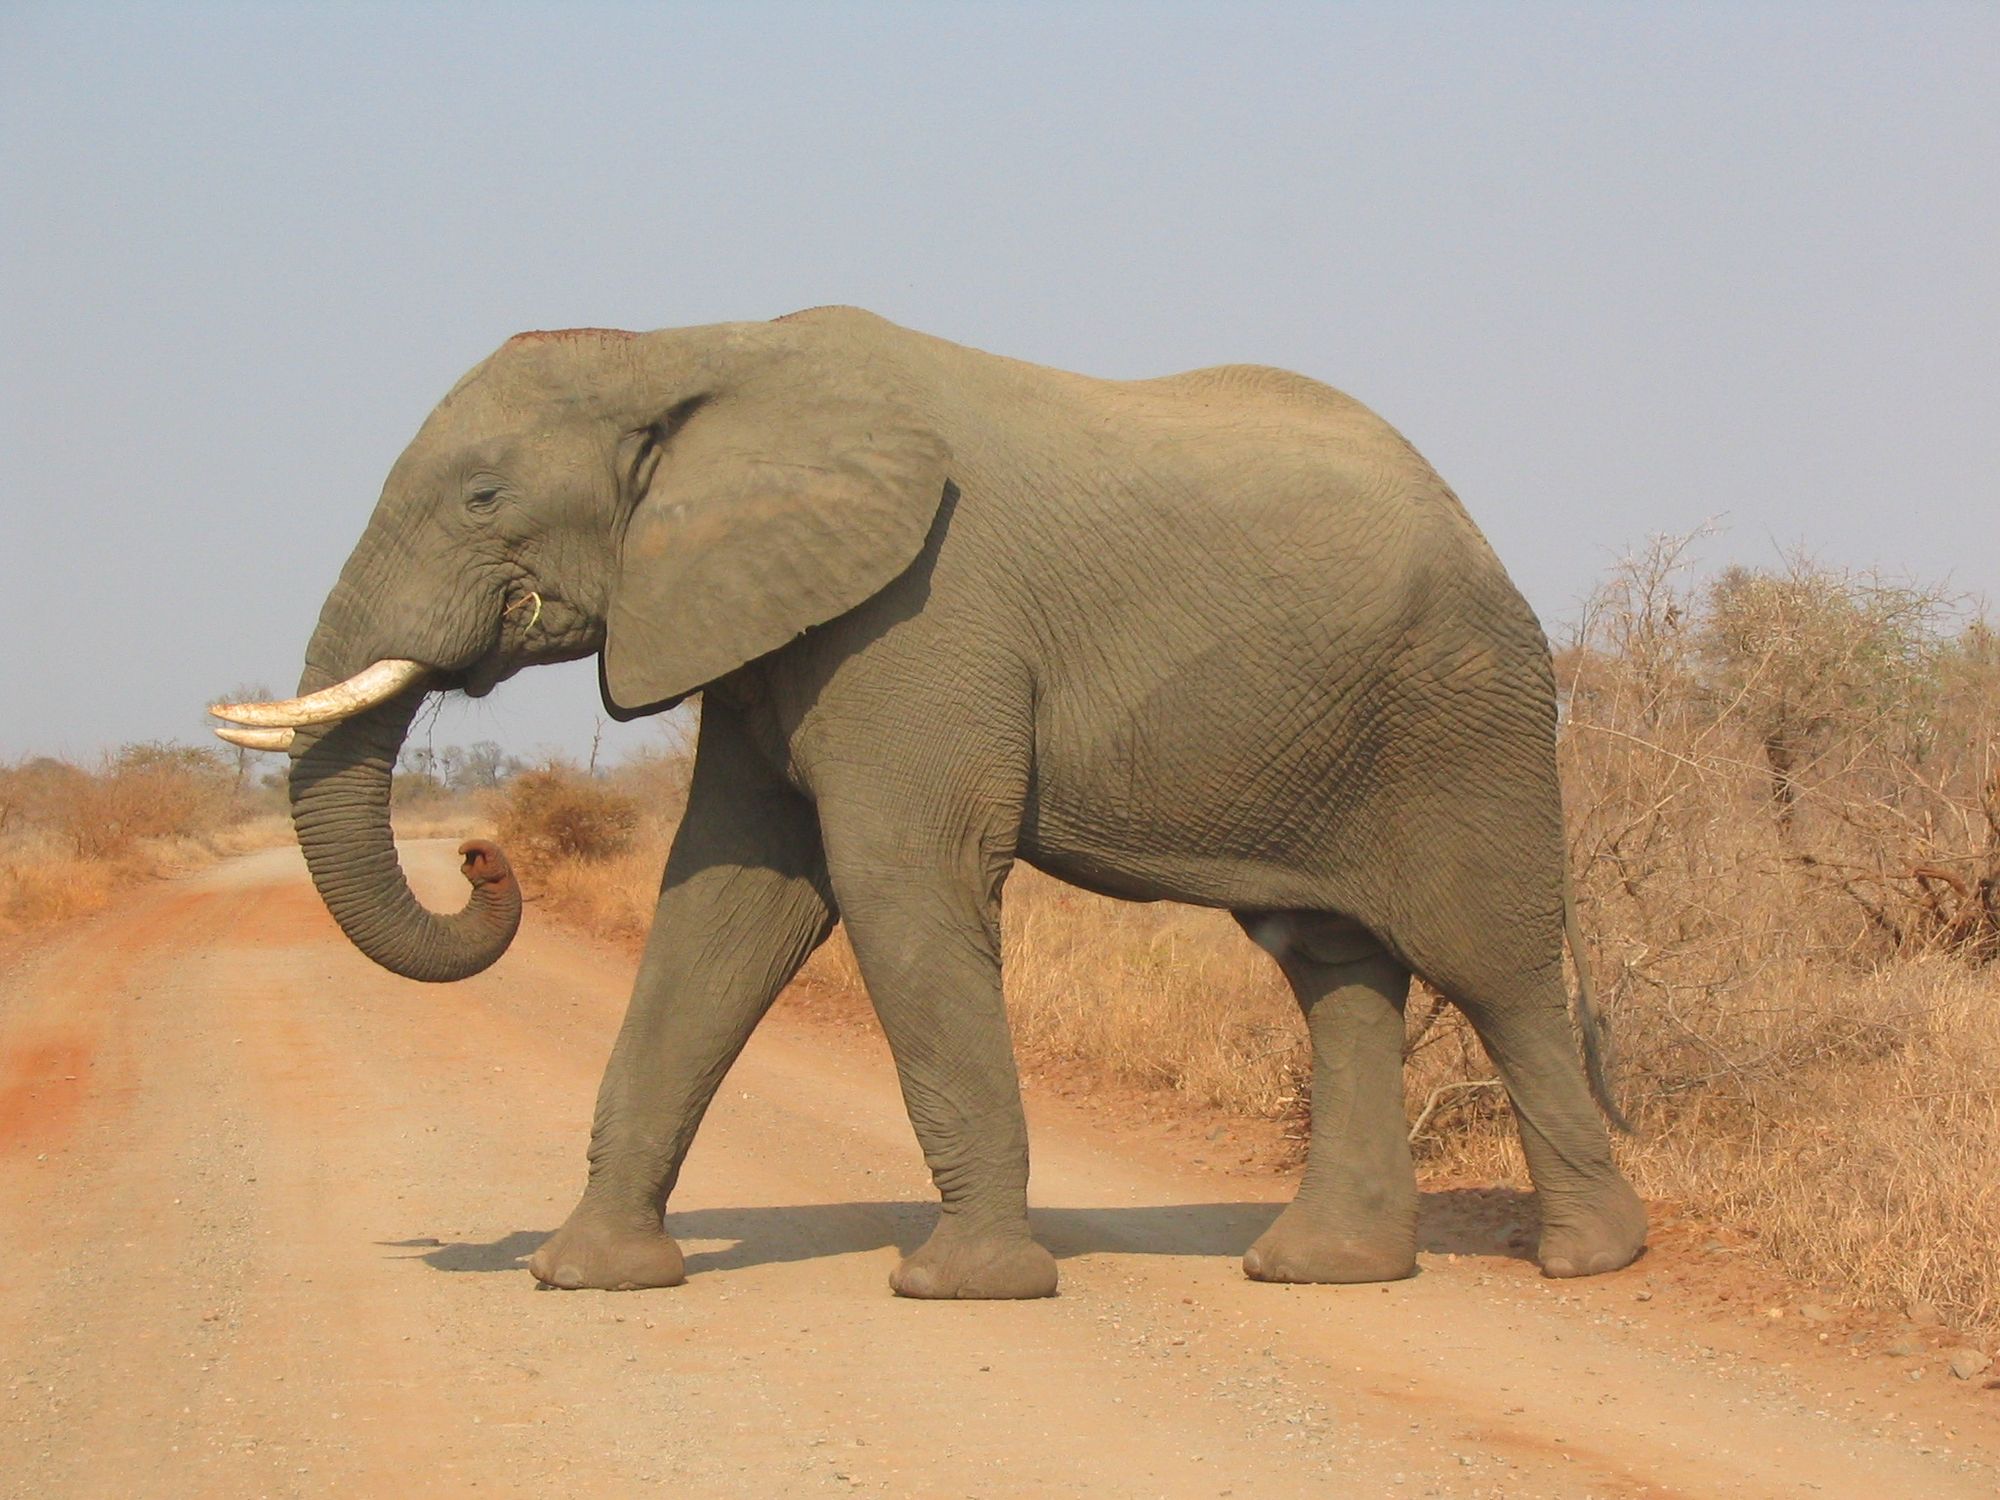 An elephant, walking across a dirt road